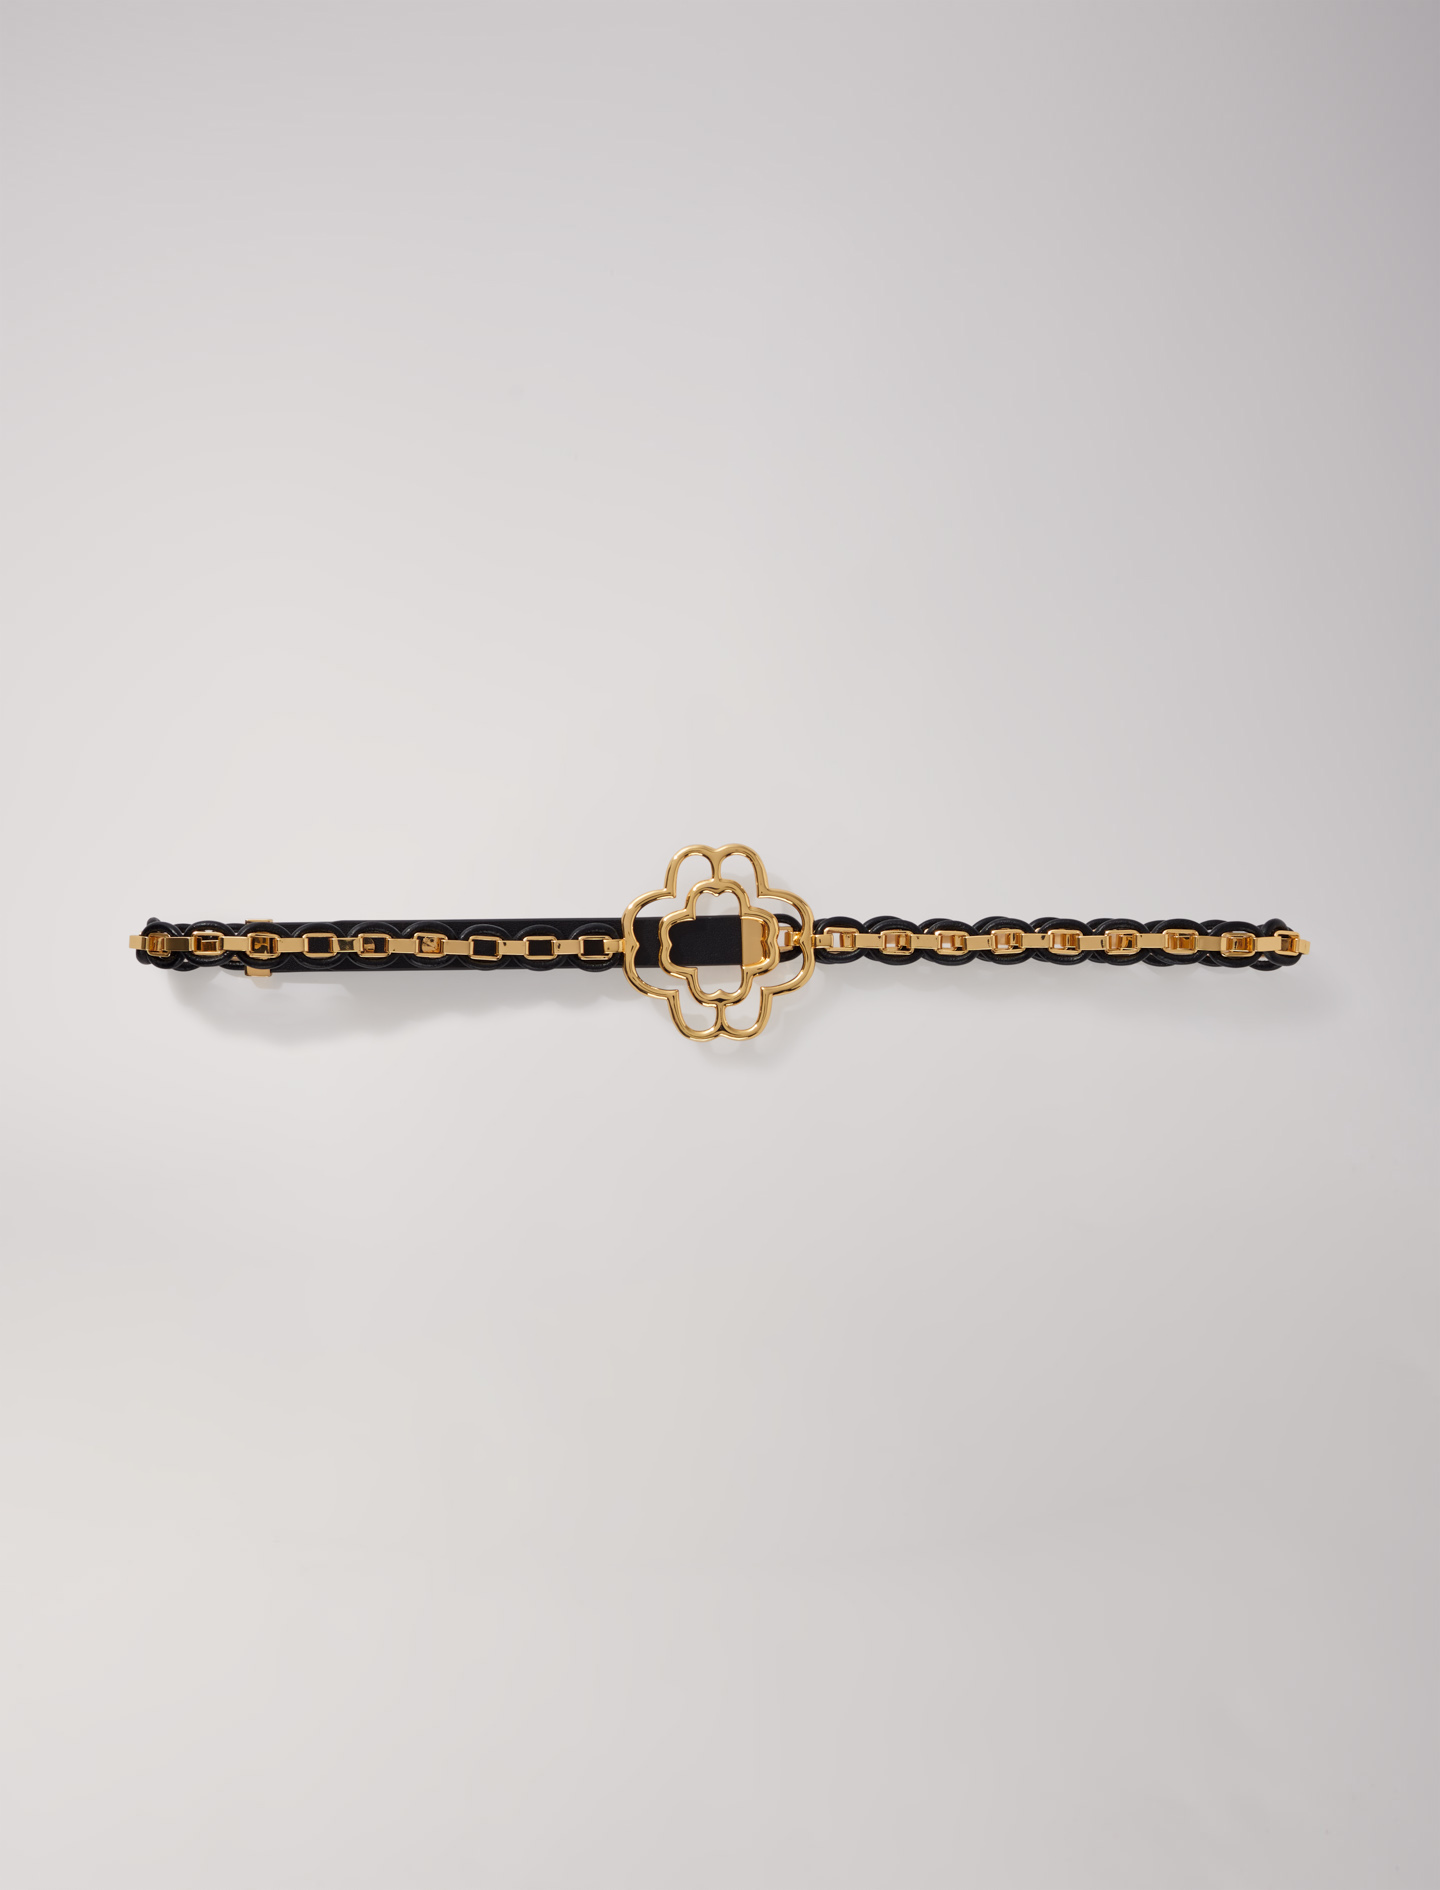 Mixte's brass Chain: Clover fine mix chain belt for Spring/Summer, size Mixte-Belts-US L / FR 3, in color Black / Black